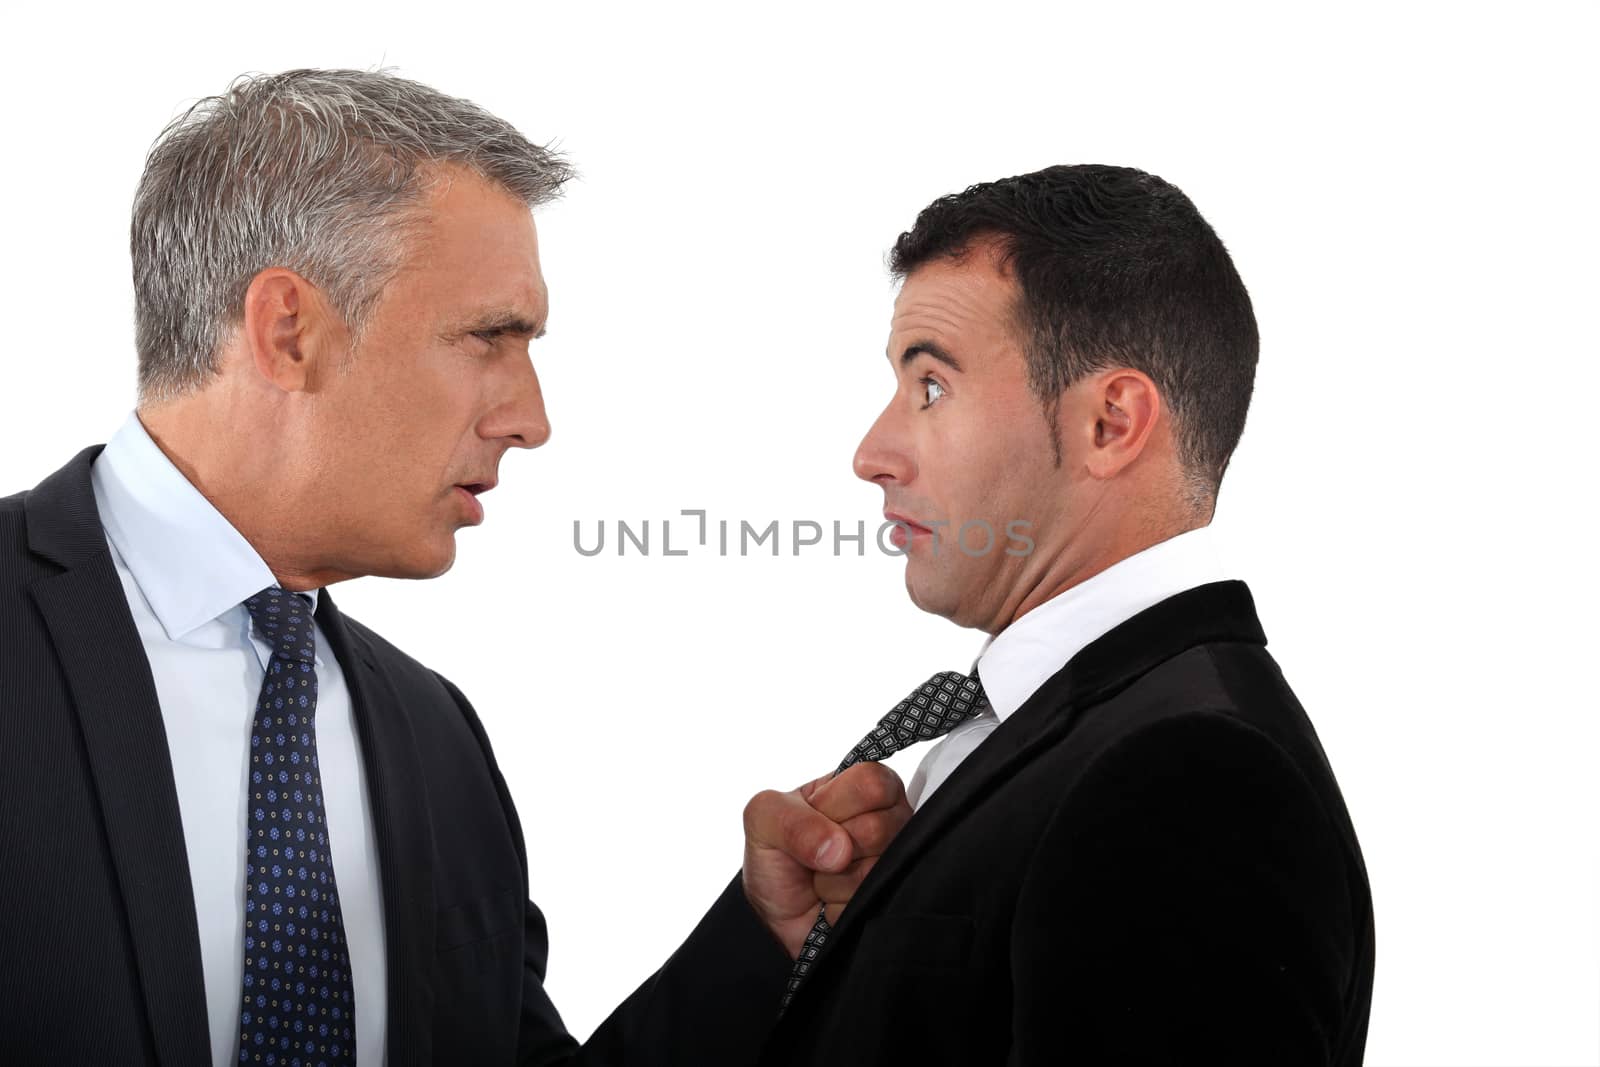 Businessmen having an argument